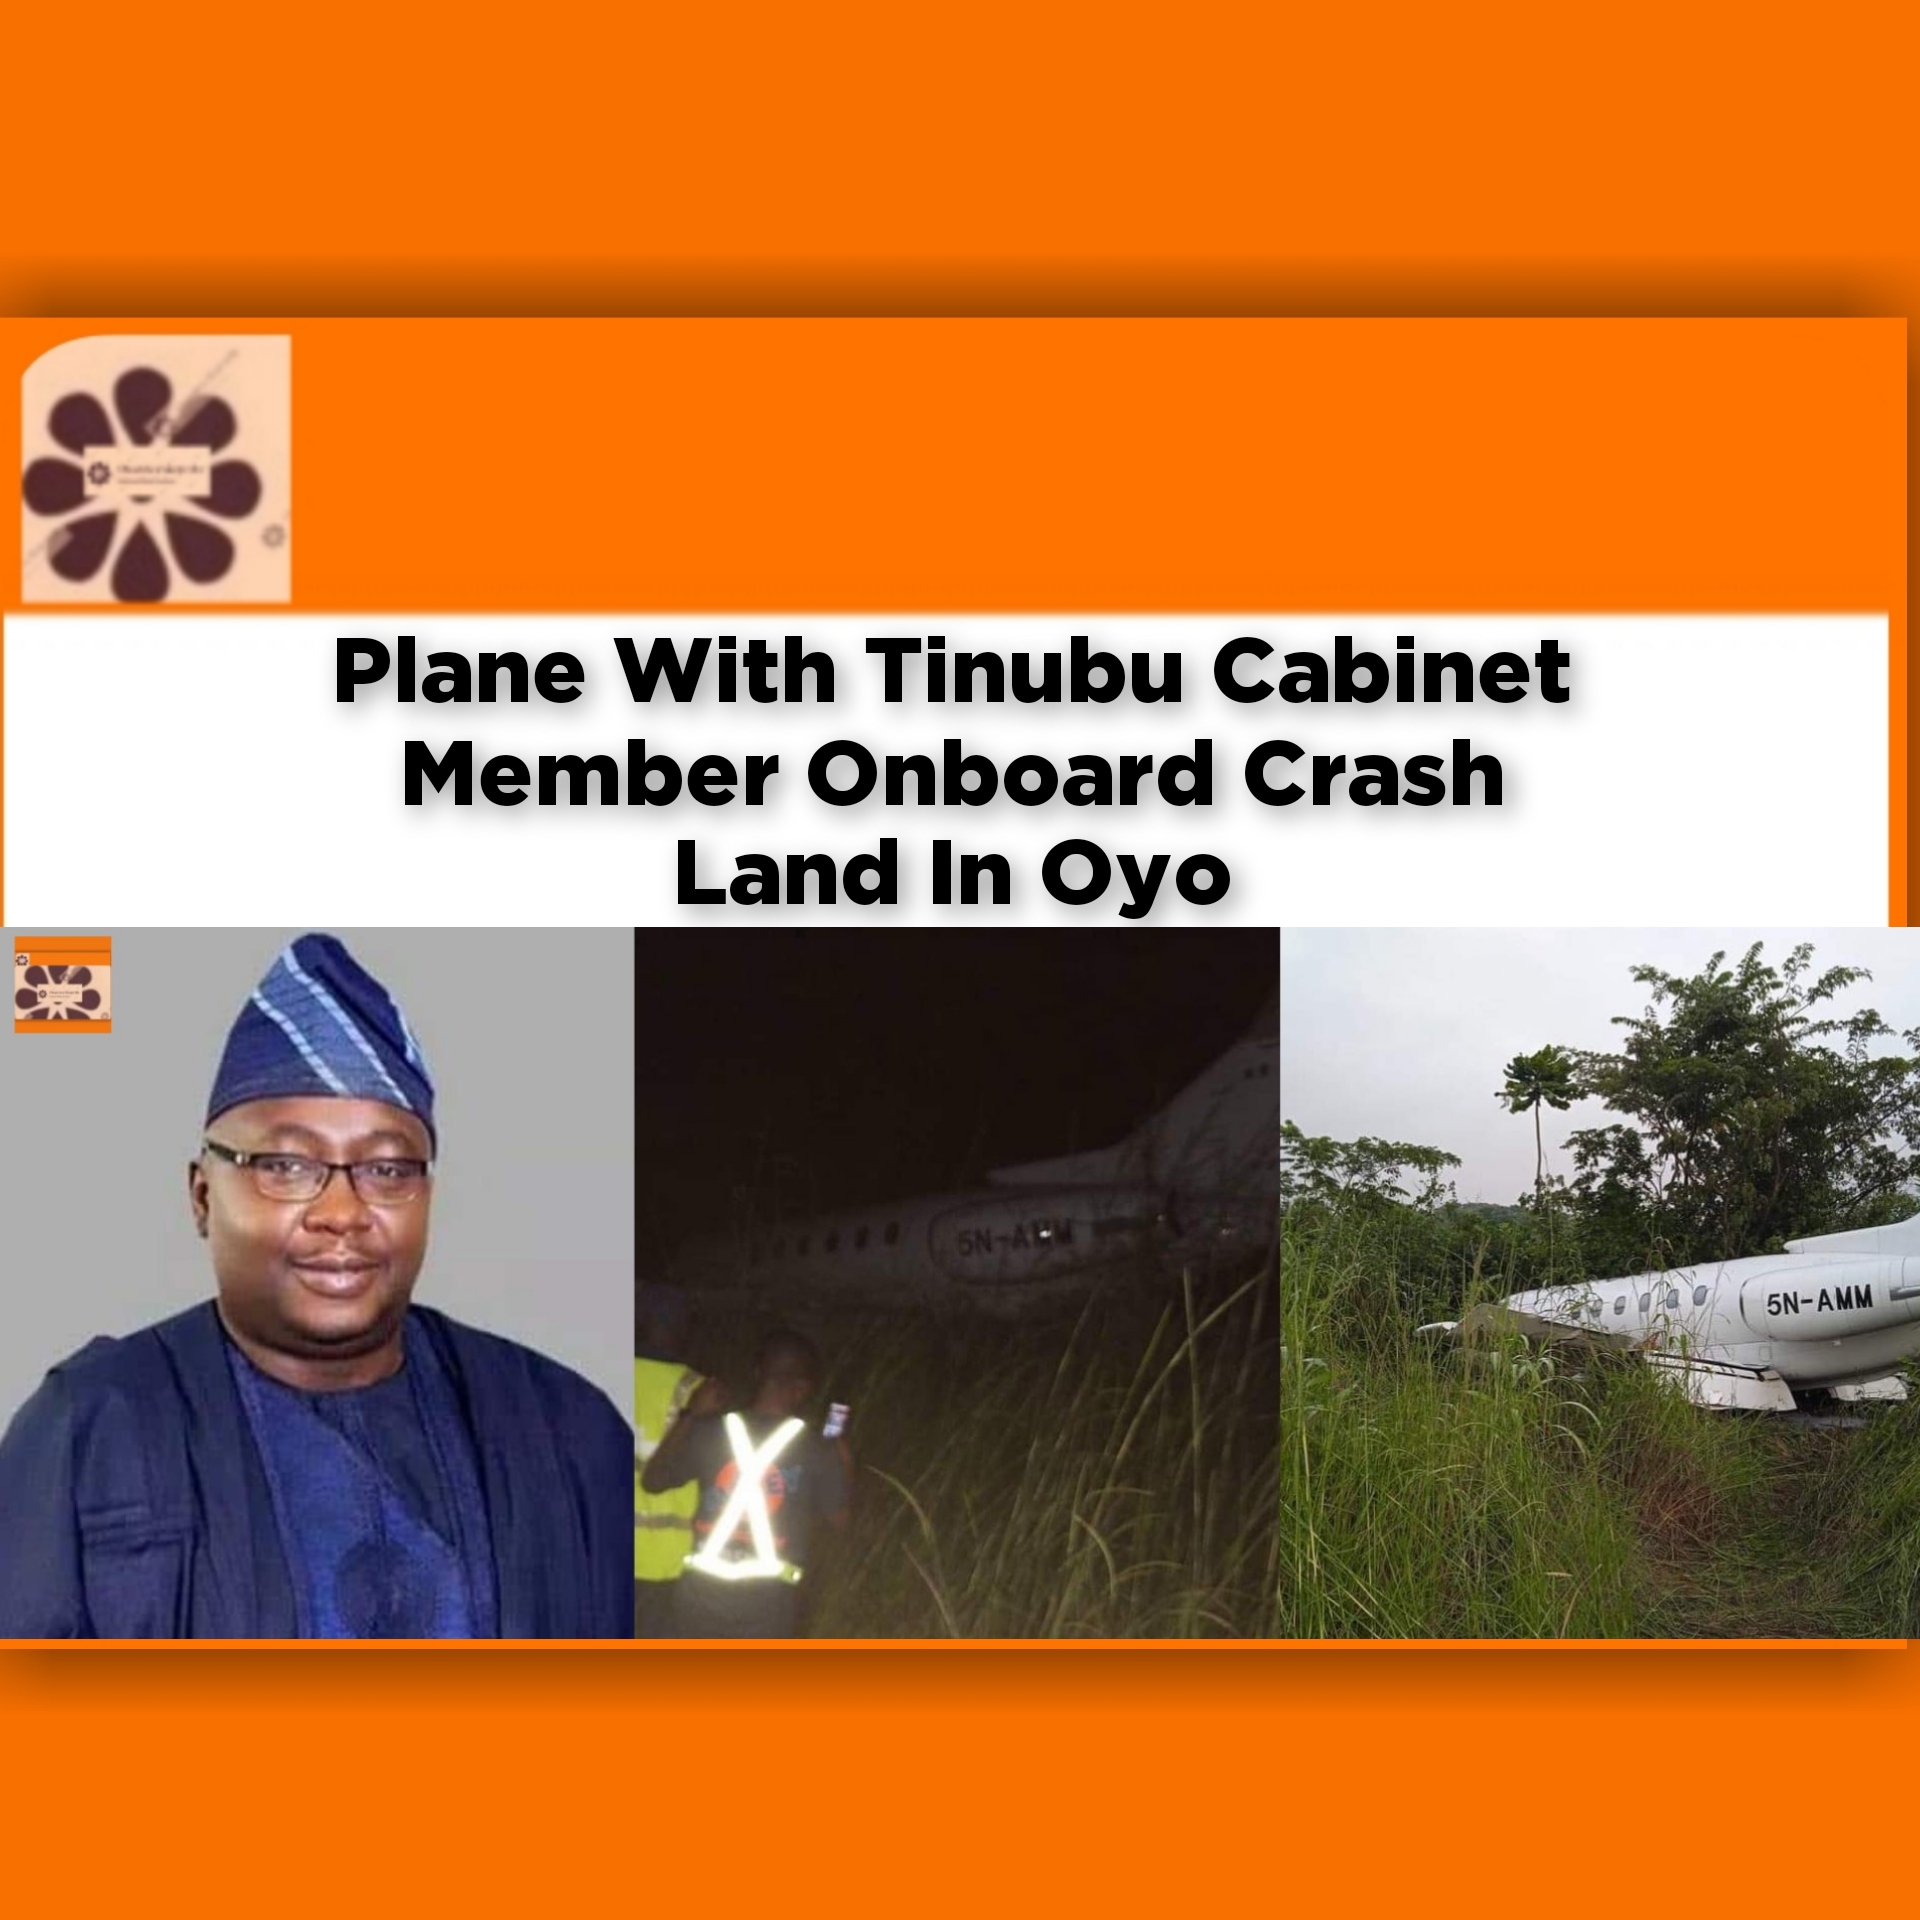 Plane With Tinubu Cabinet Member Onboard Crash Land In Oyo ~ OsazuwaAkonedo #Adebayo #Adelabu #Crash #Ibadan #Minister #Oyo #Plane #Tinubu